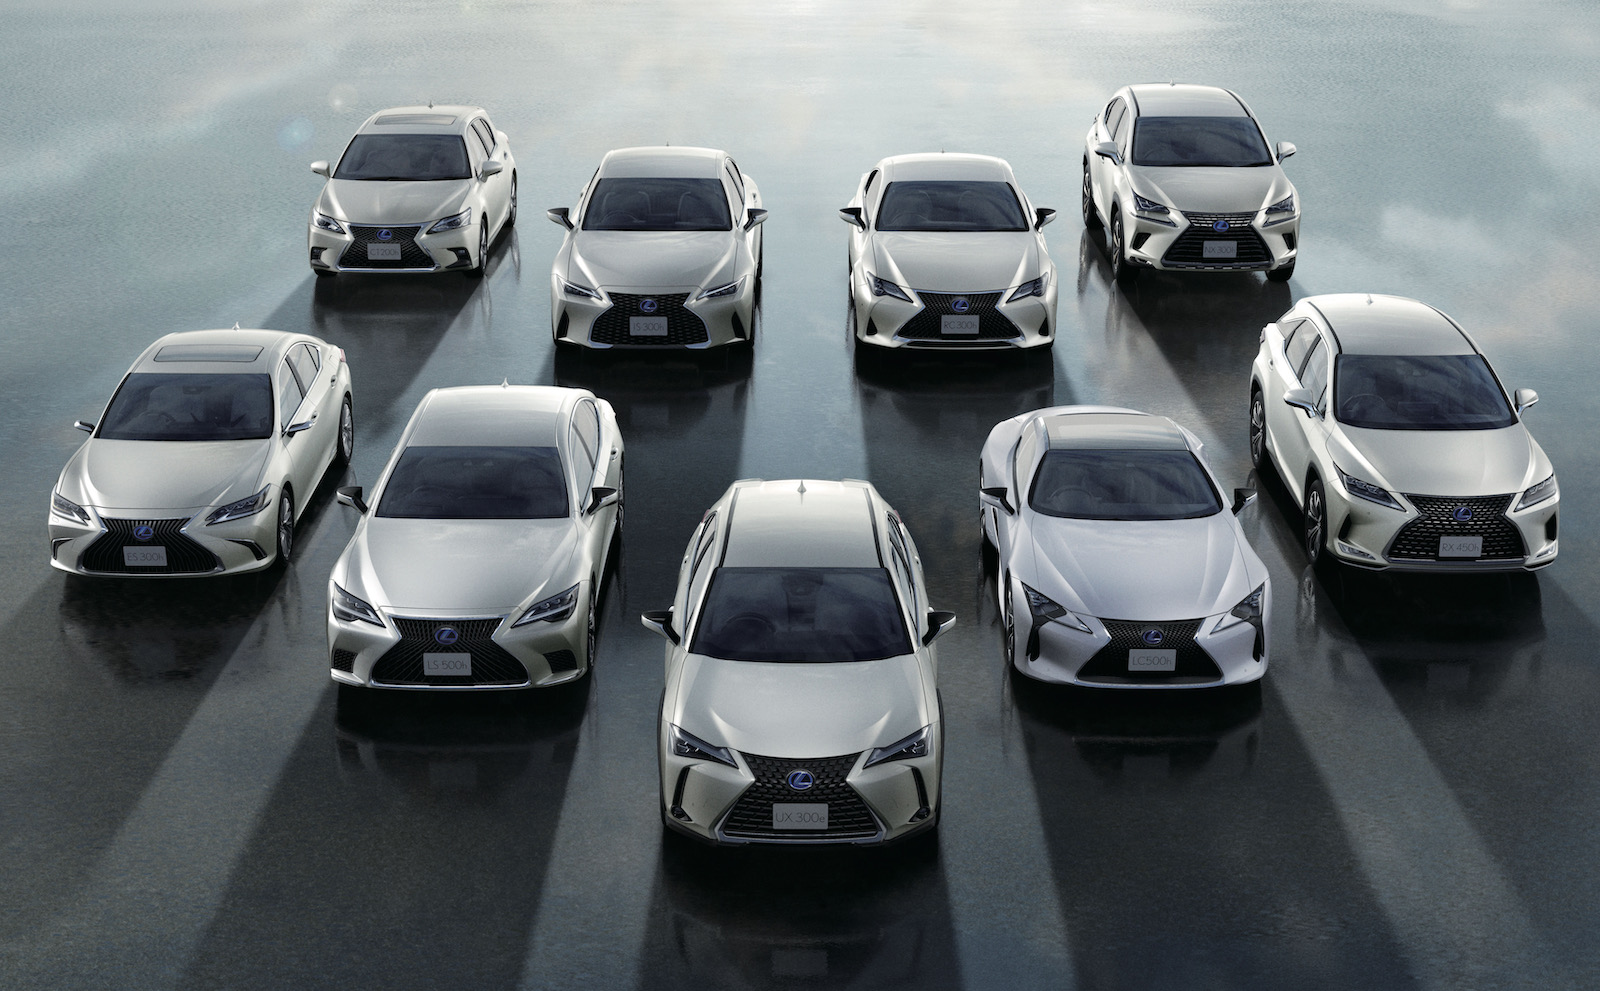 Lexus celebrates 2 million sales of electrified models, EV coming in 2022